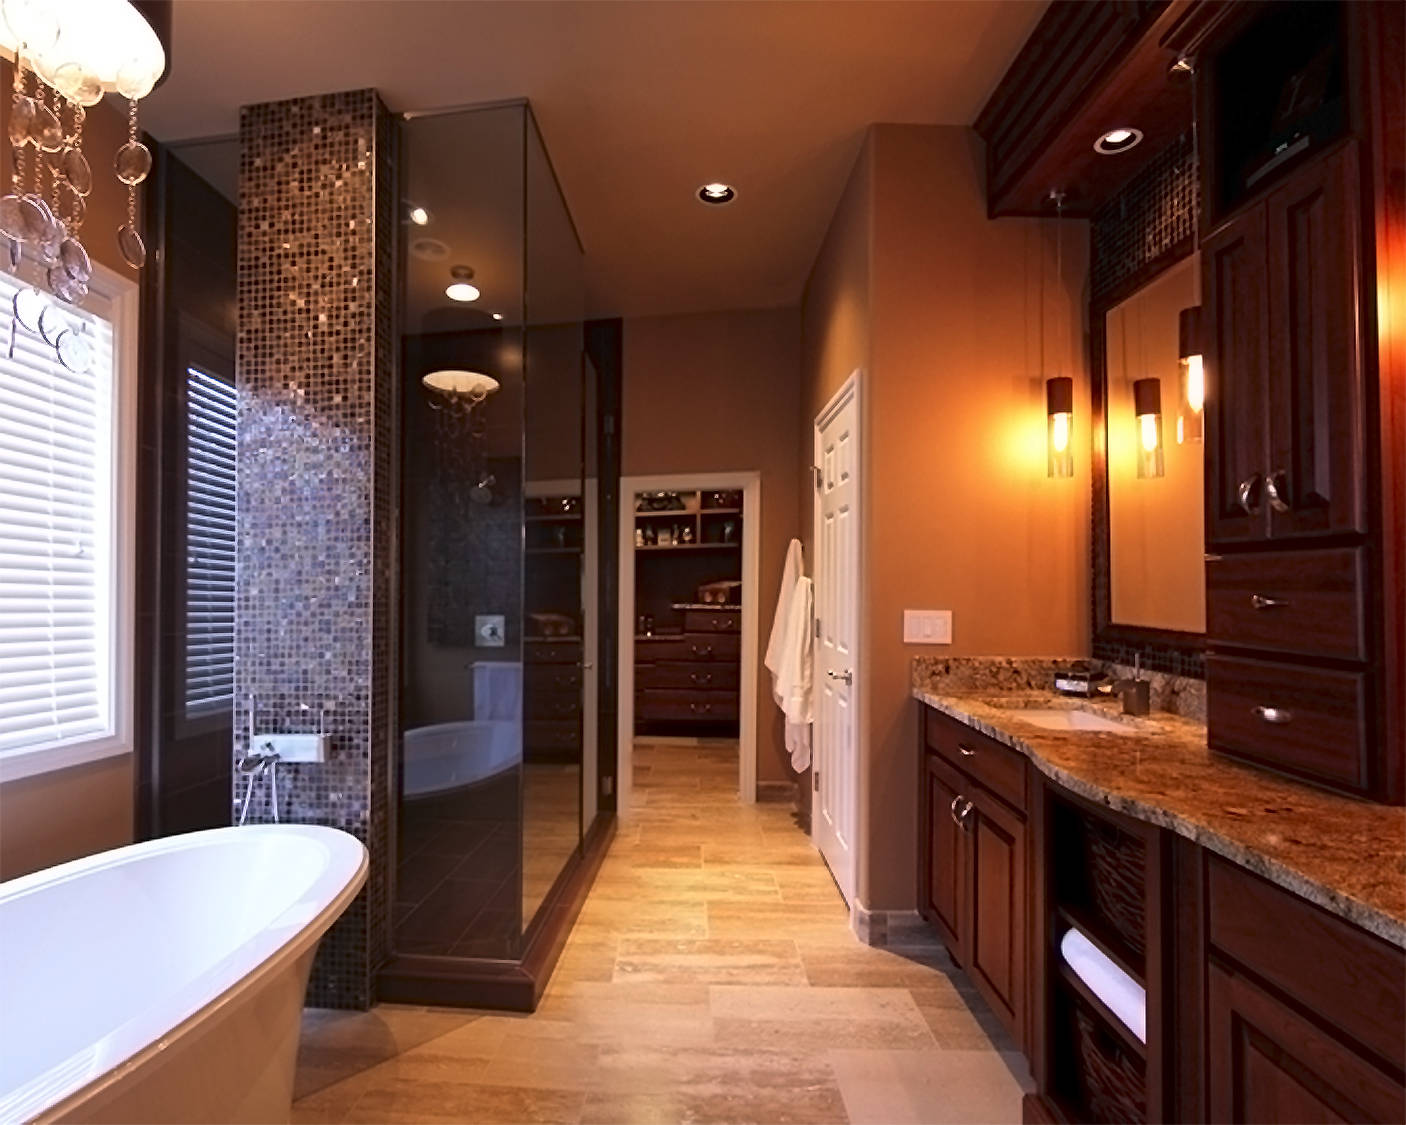 bathroom remodel remodeling bathrooms spa shower remodels designs master room tub bath inspiration luxurious renovation tiles toilet